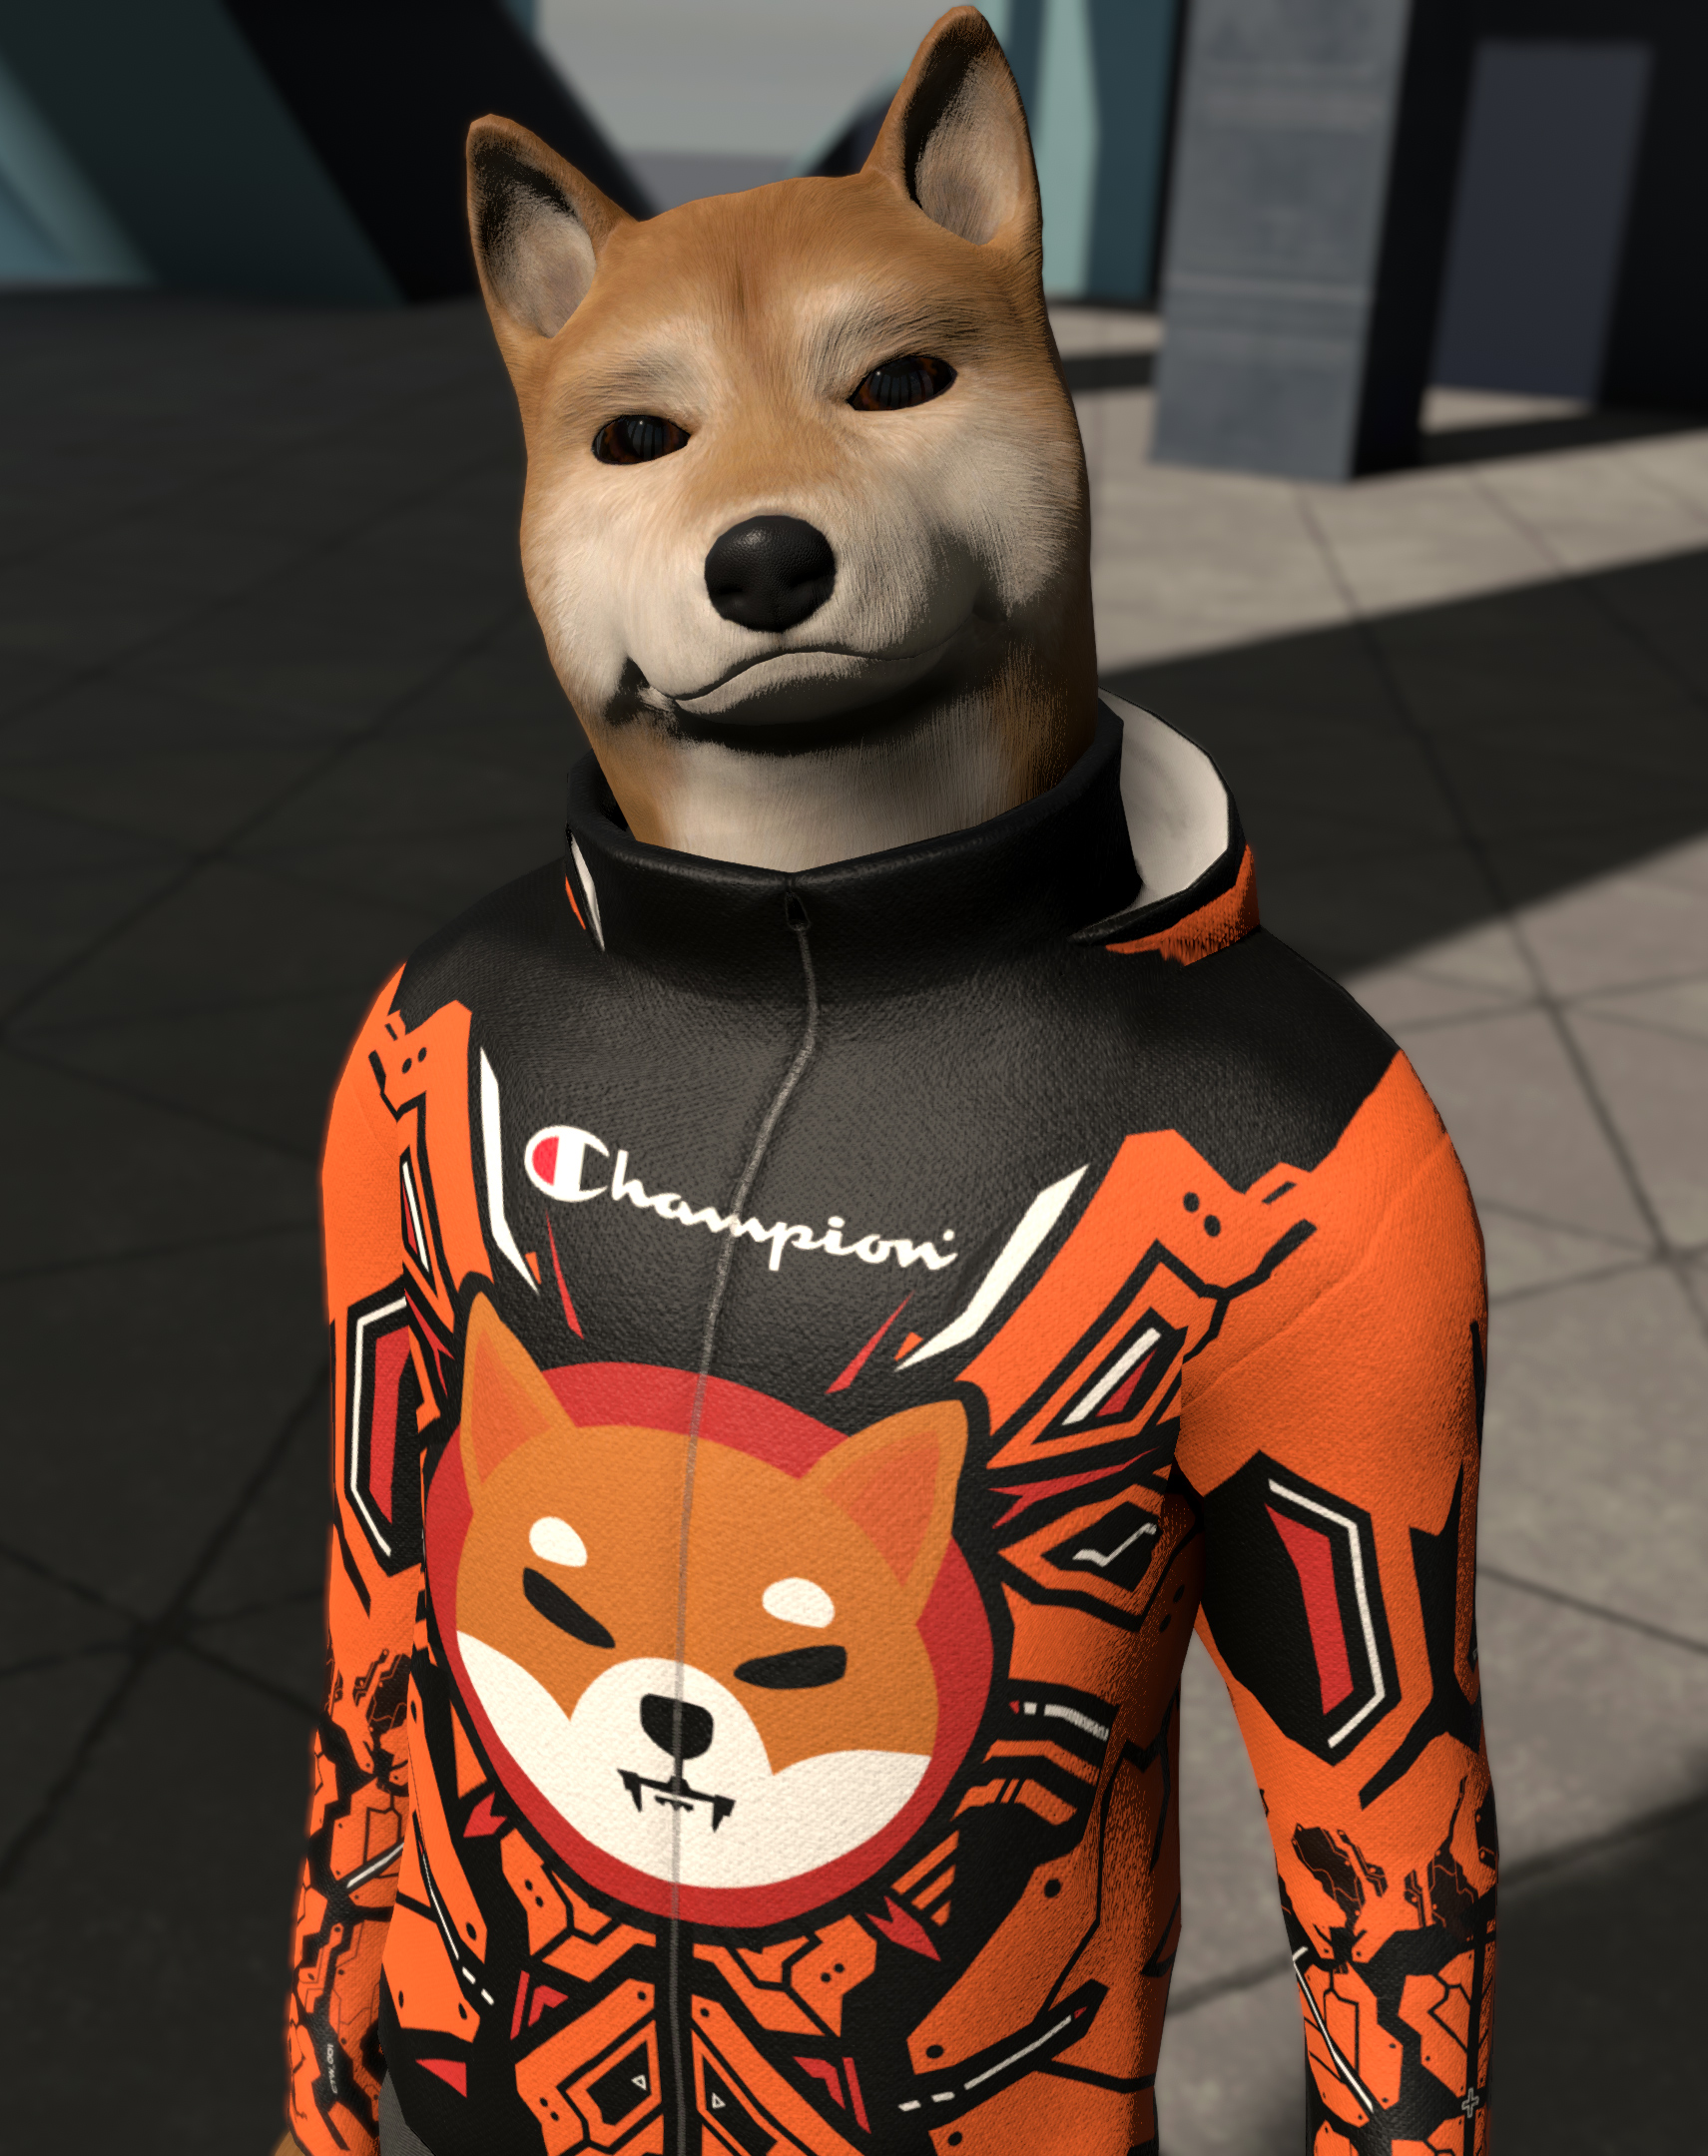 Dog avatar